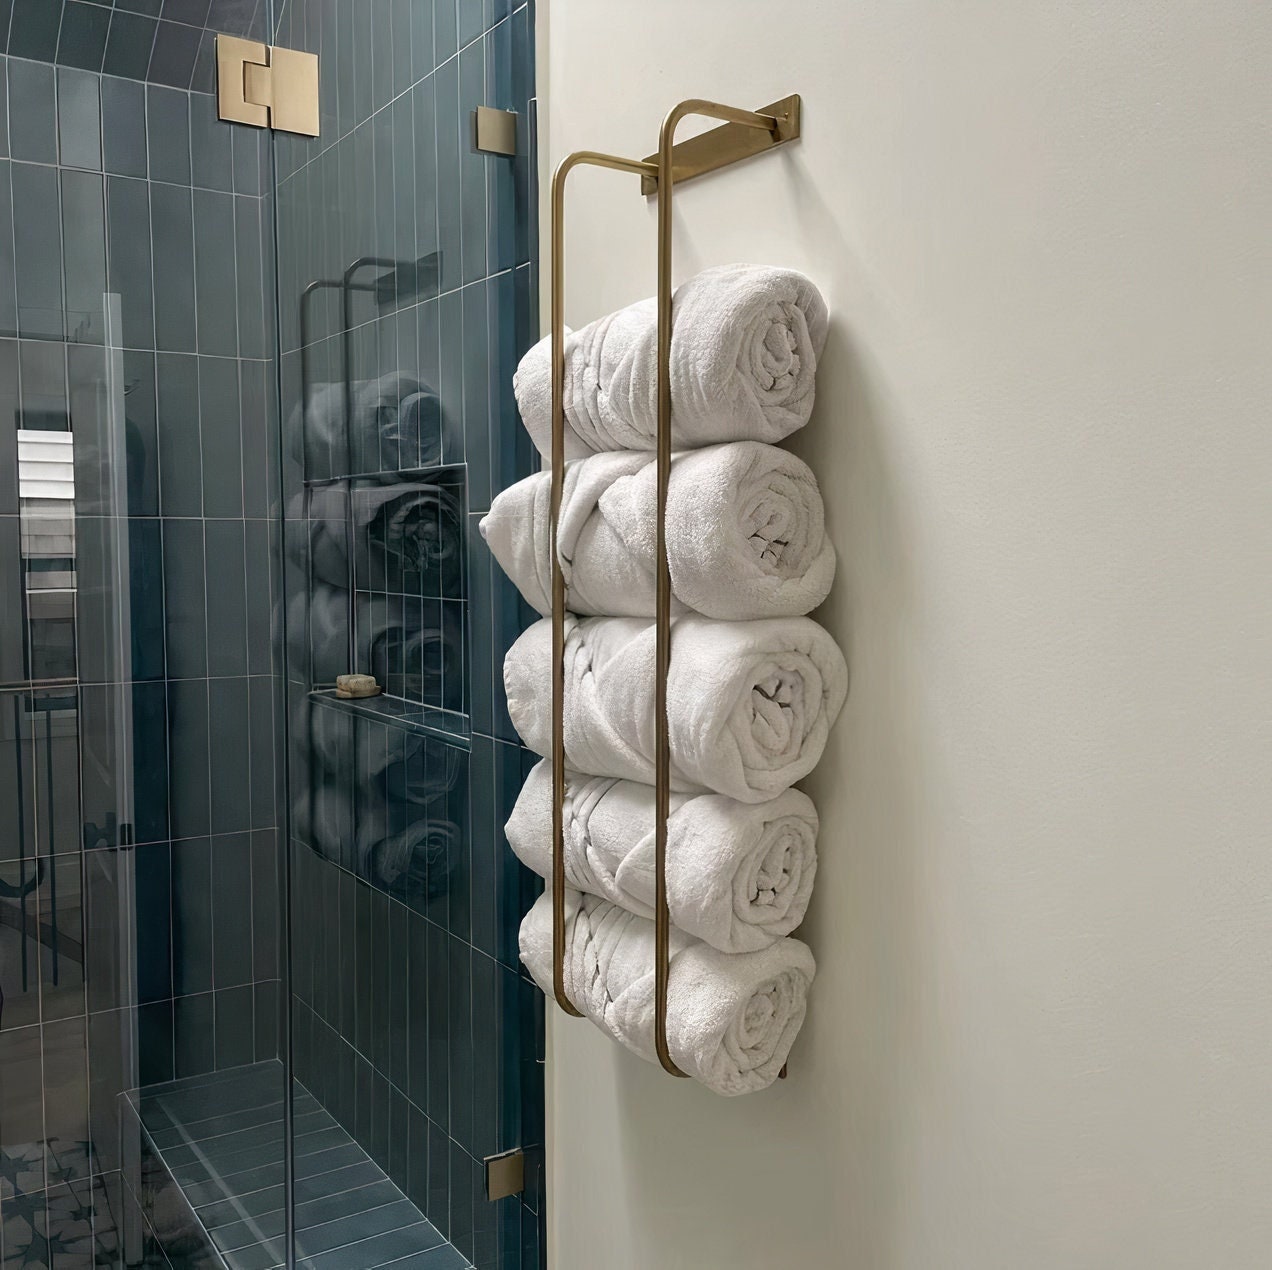 Wallniture Boto Towel Rack, Rustic Wall Decor Bathroom Organizer